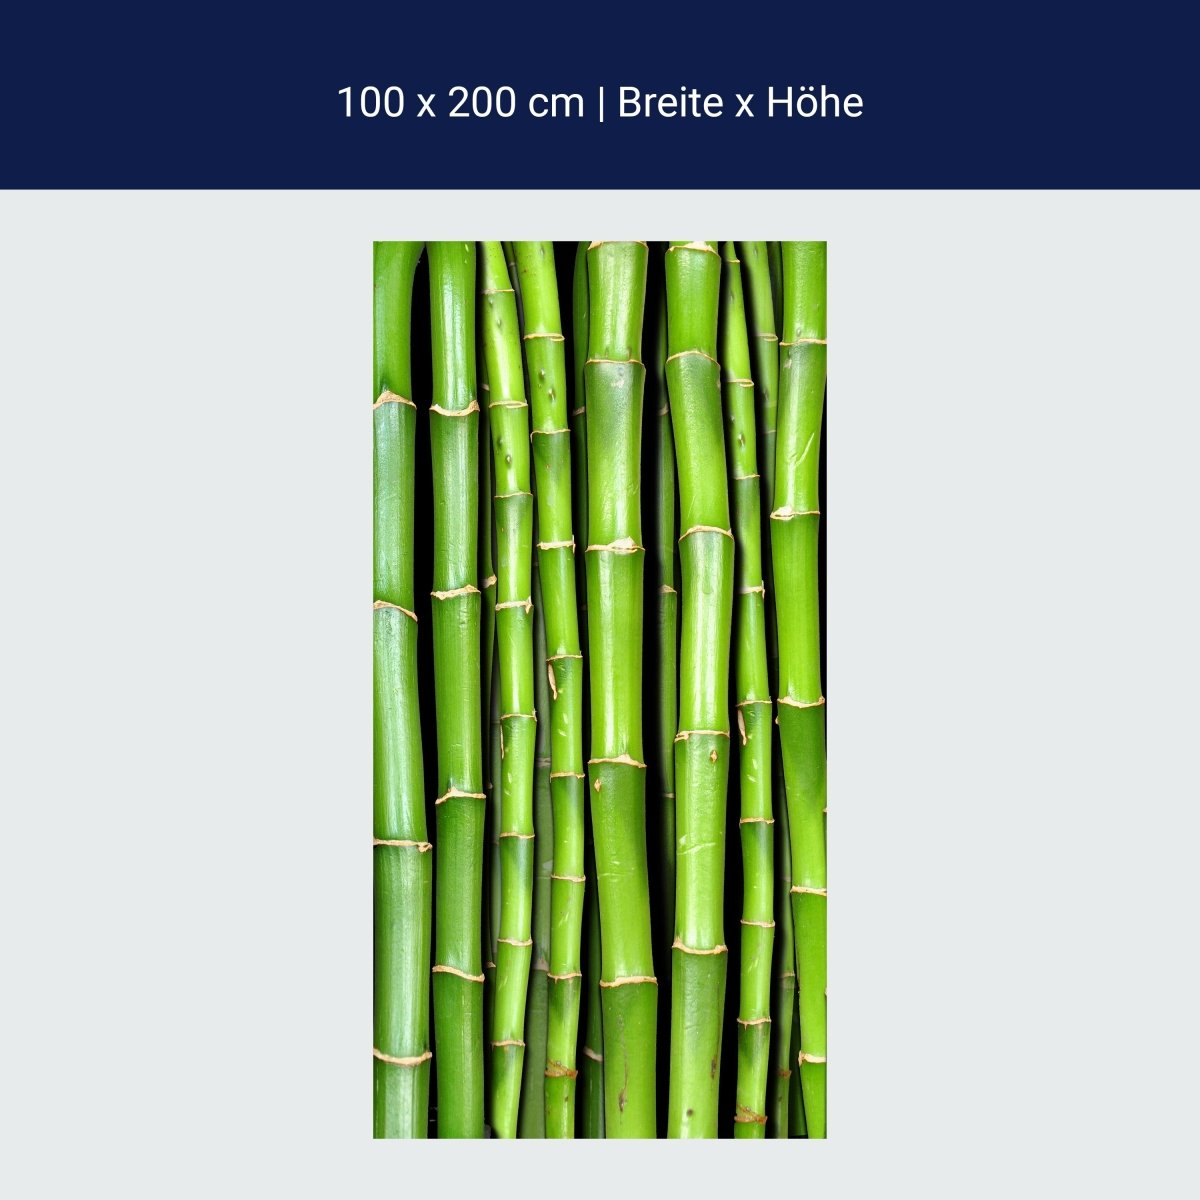 Bamboo shower screen M0054